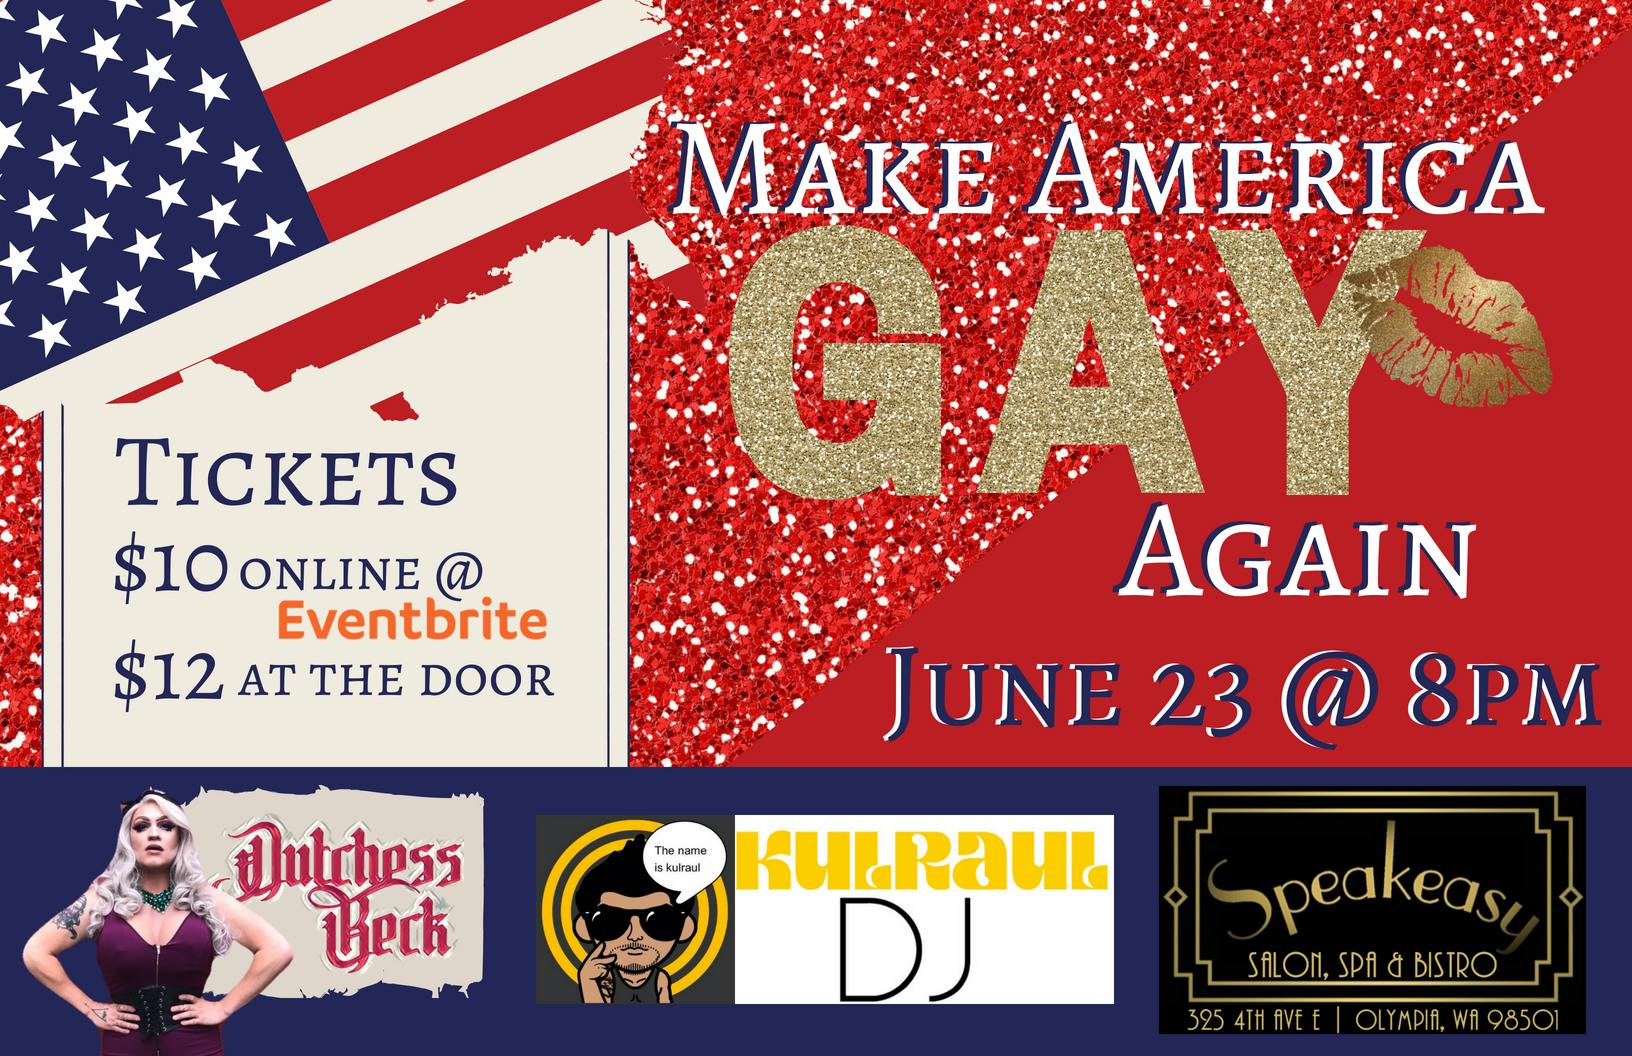 Make America Gay Again